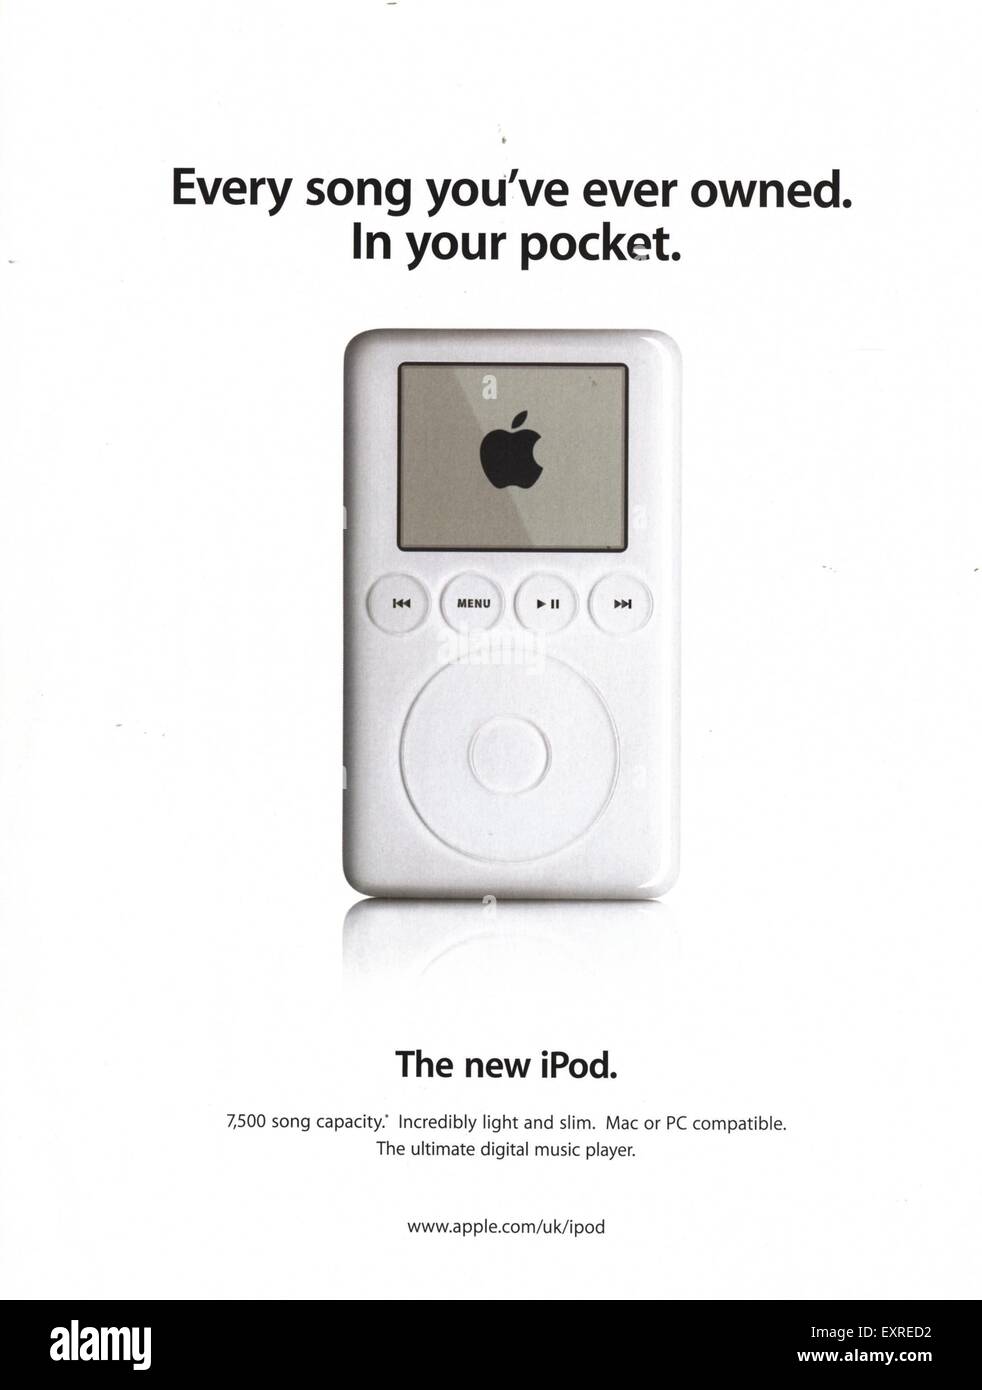 2000s UK Apple Ipod Magazine Advert Stock Photo